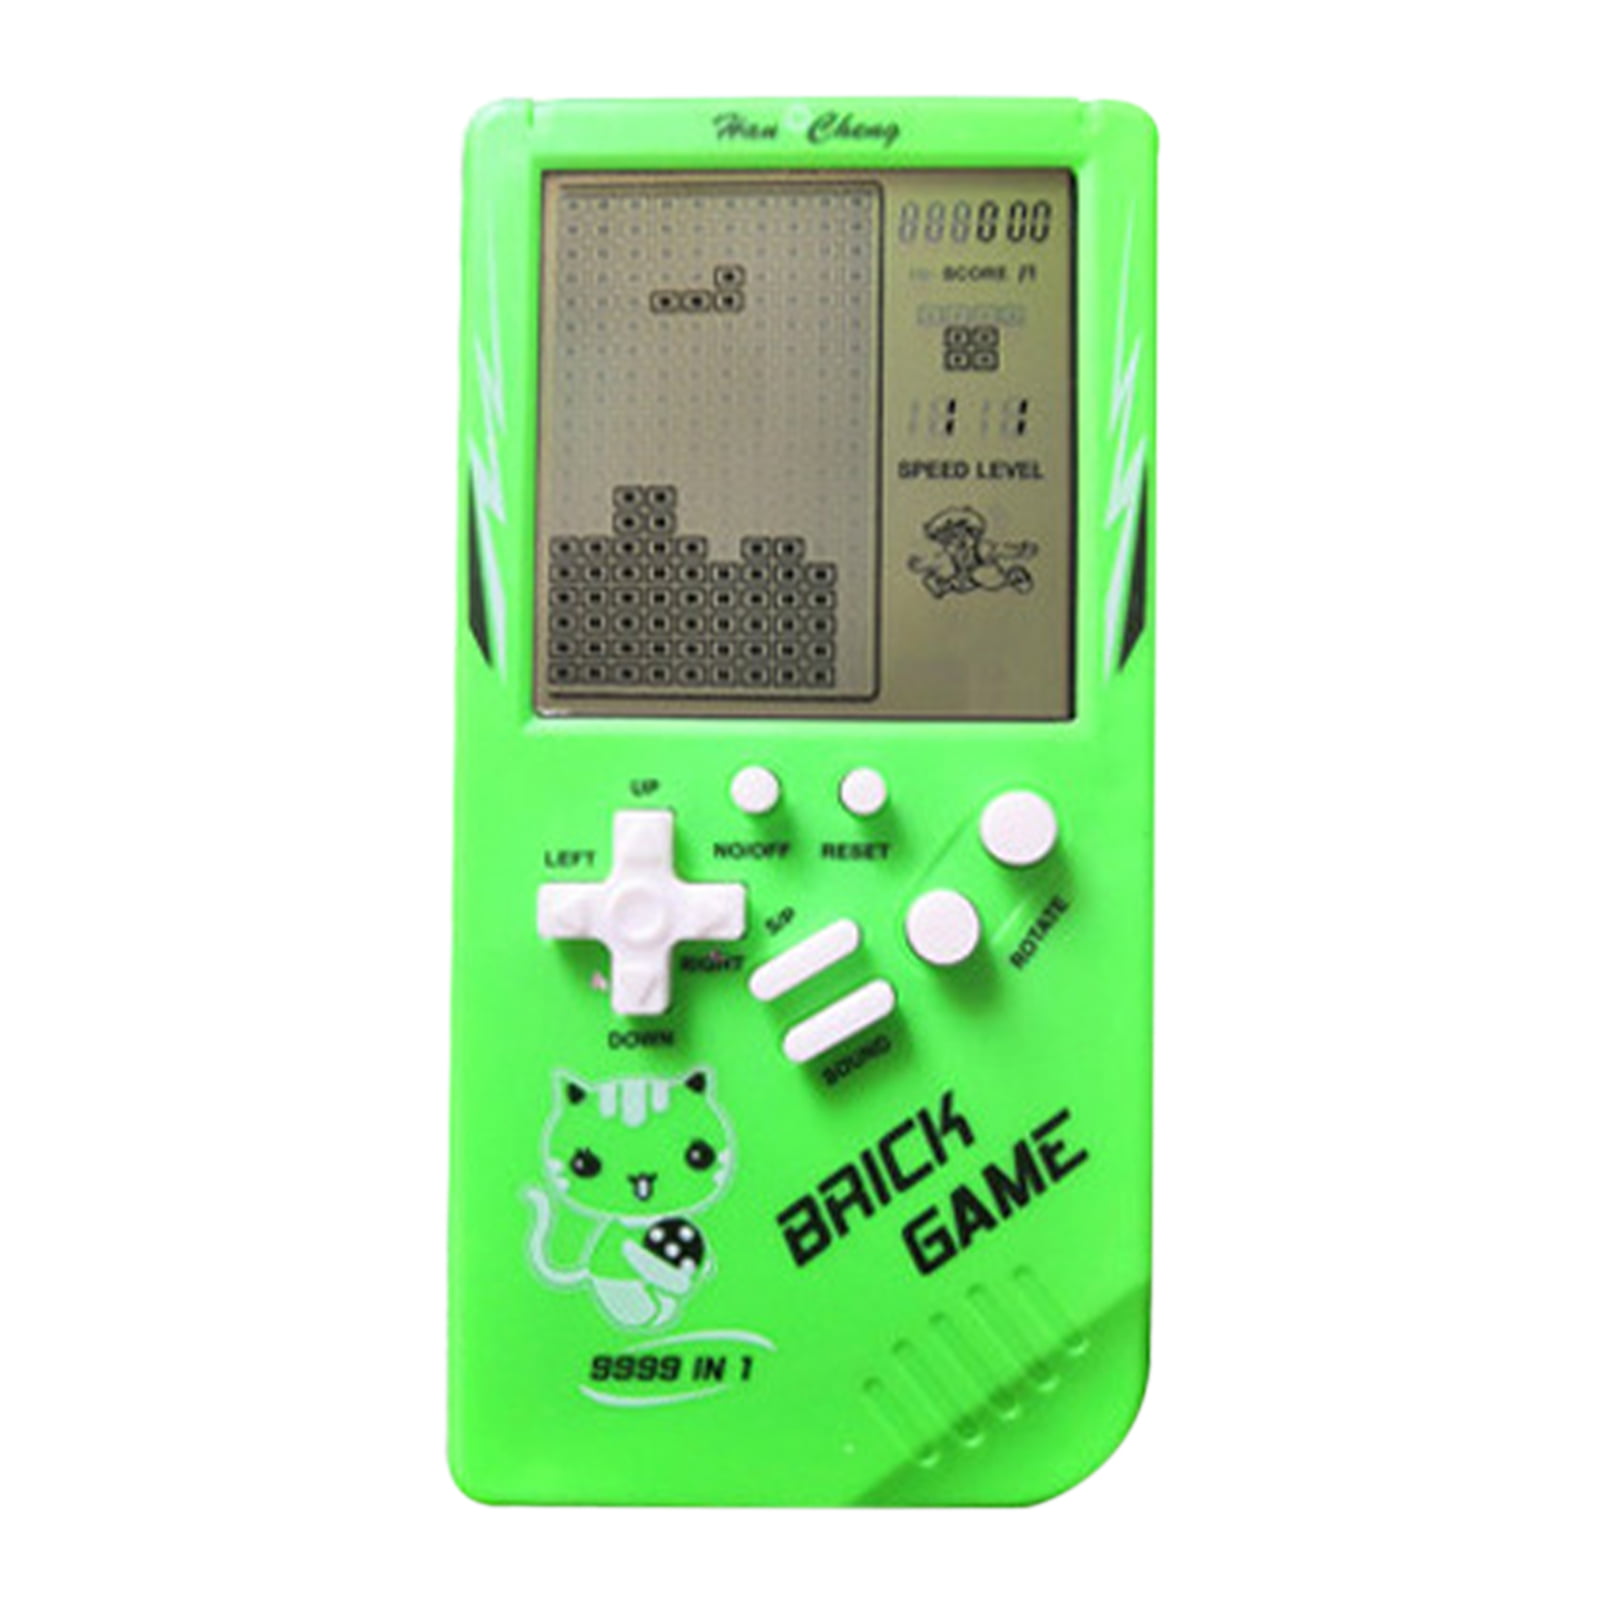 26 Micro Bricks Mini Electronic Video Game Classic Arcade Game Kids Toy Gift 